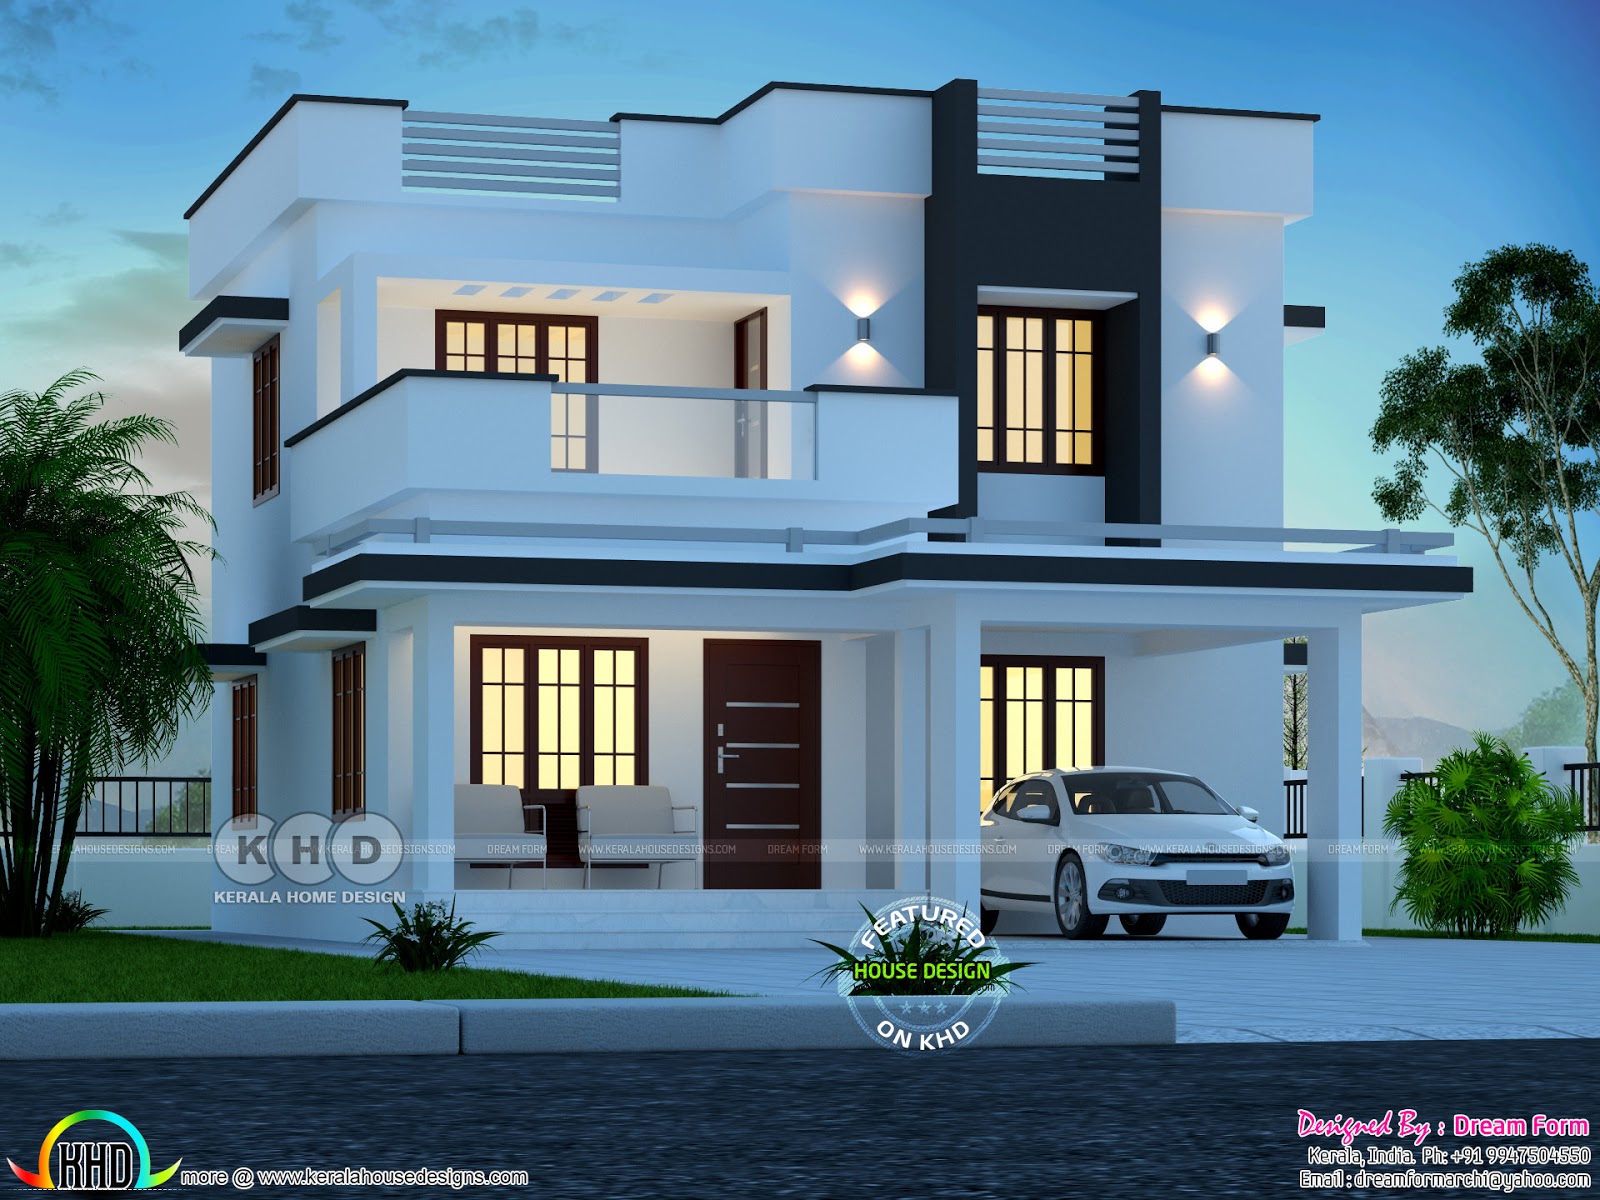 3 bedroom 1700 sq.ft modern home design - Kerala home ...